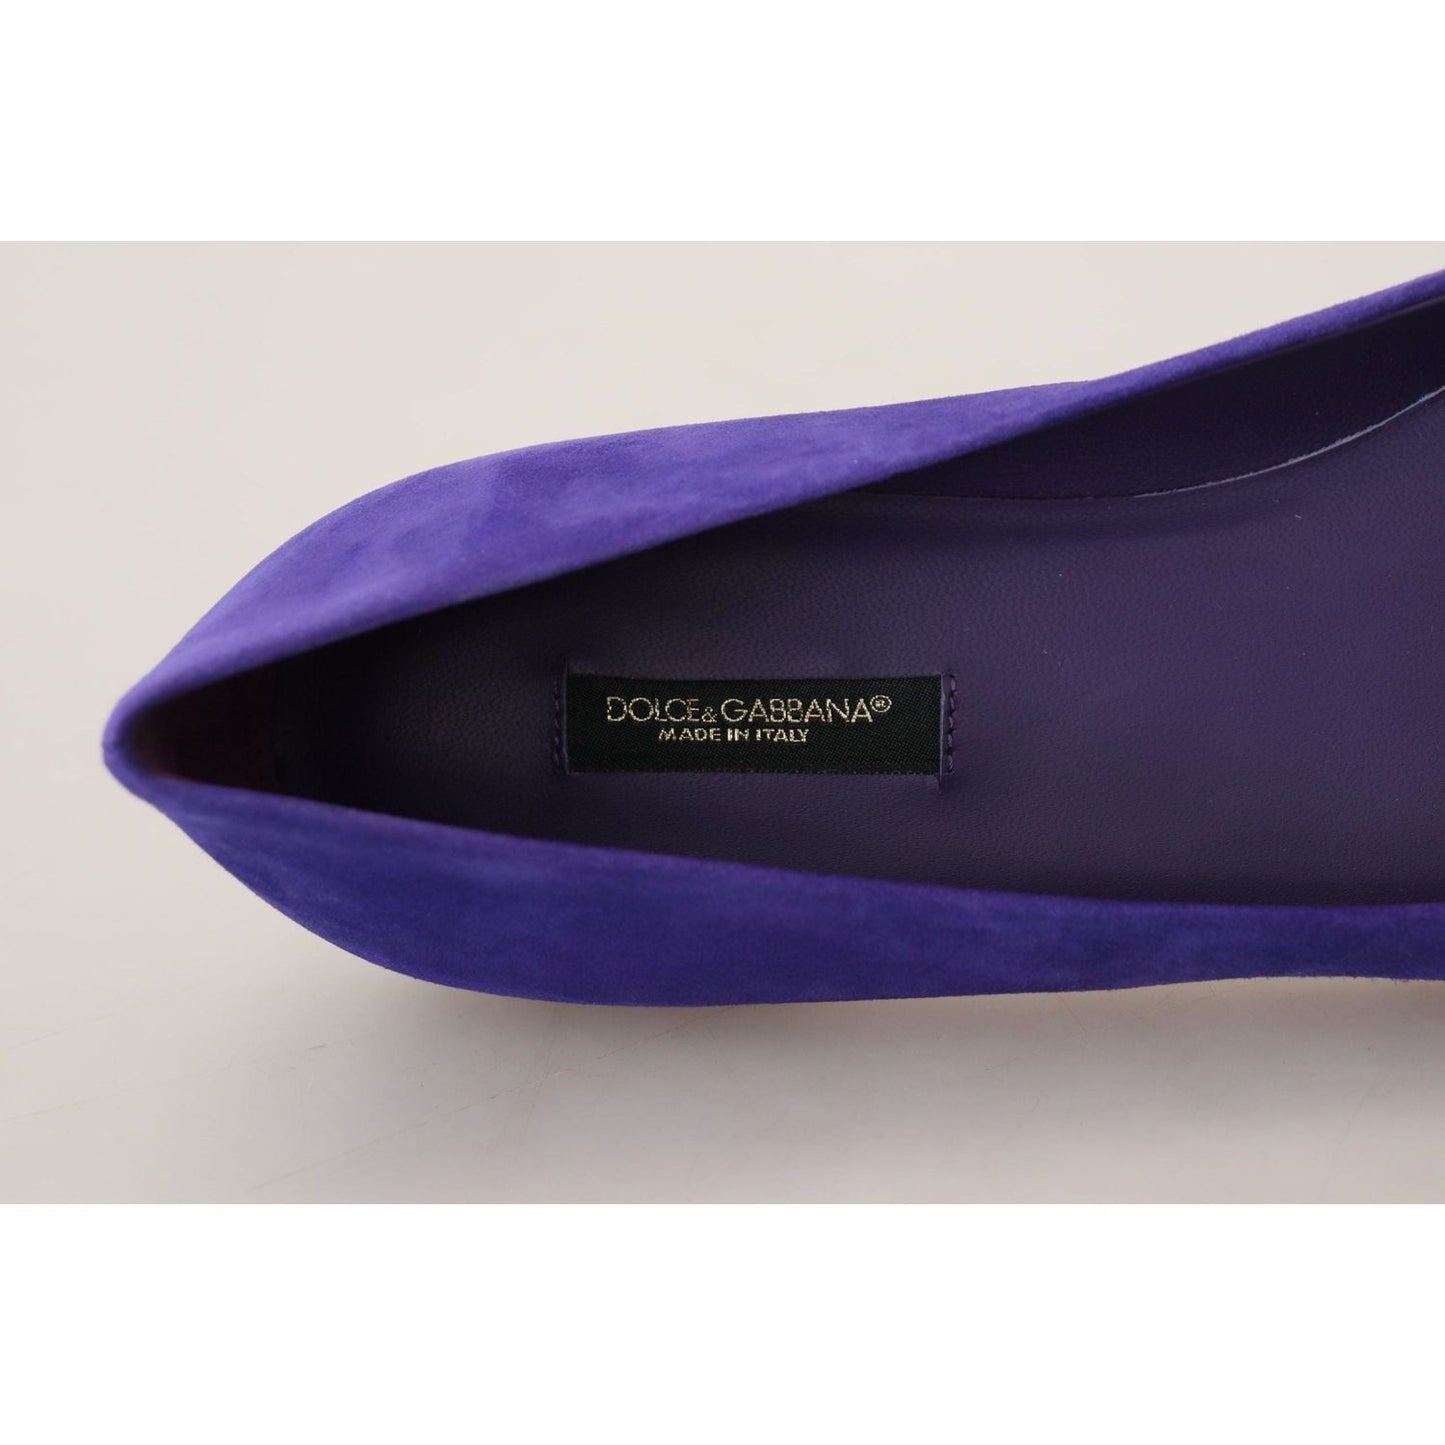 Dolce & Gabbana Embellished Crystal Purple Suede Flats purple-suede-crystals-loafers-flats-shoes IMG_8922-scaled-2435b928-1b8.jpg